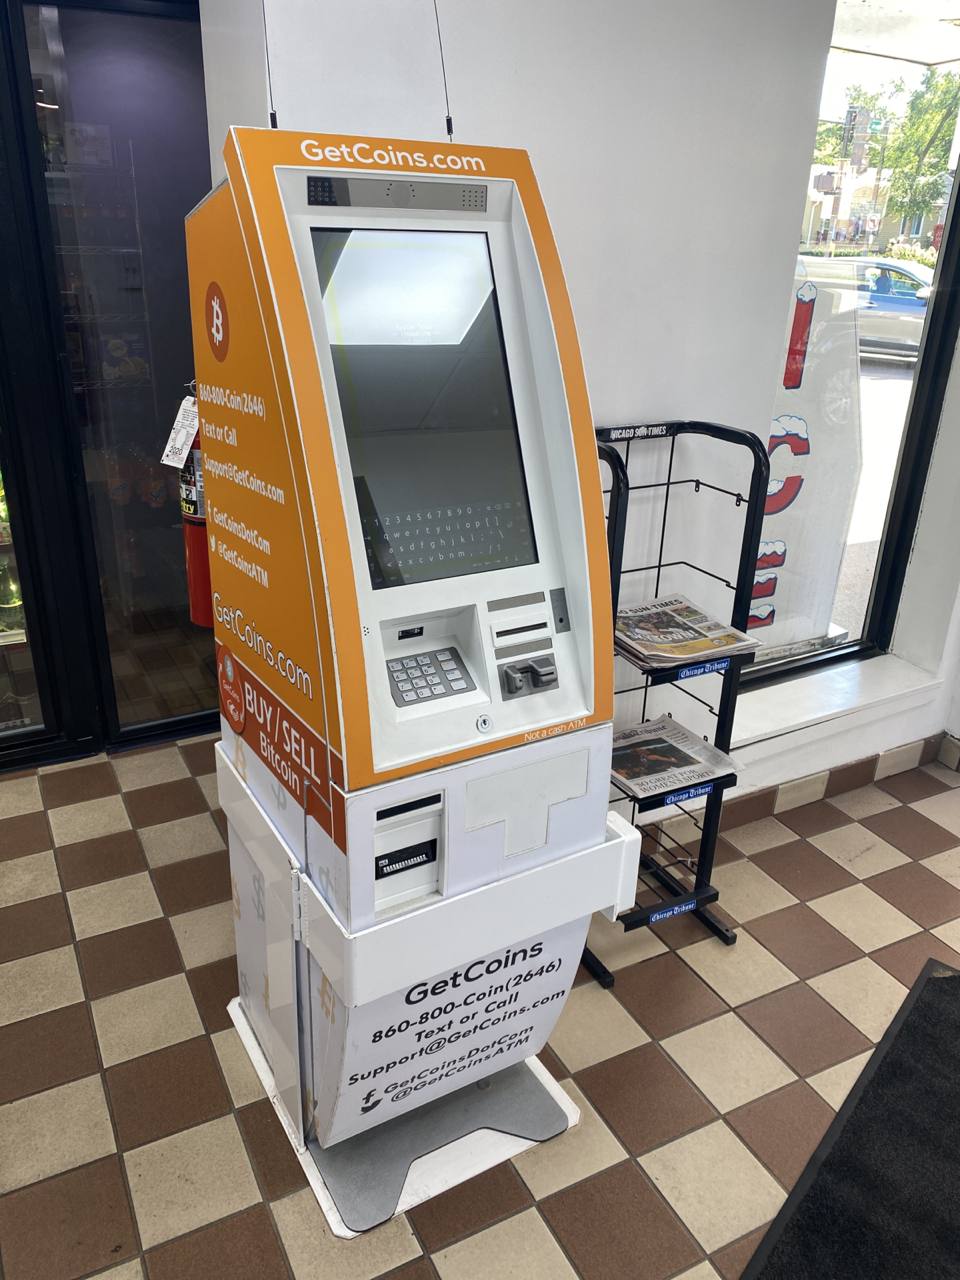 Getcoins - Bitcoin ATM - Inside of Exxon in Evanston, Illinois